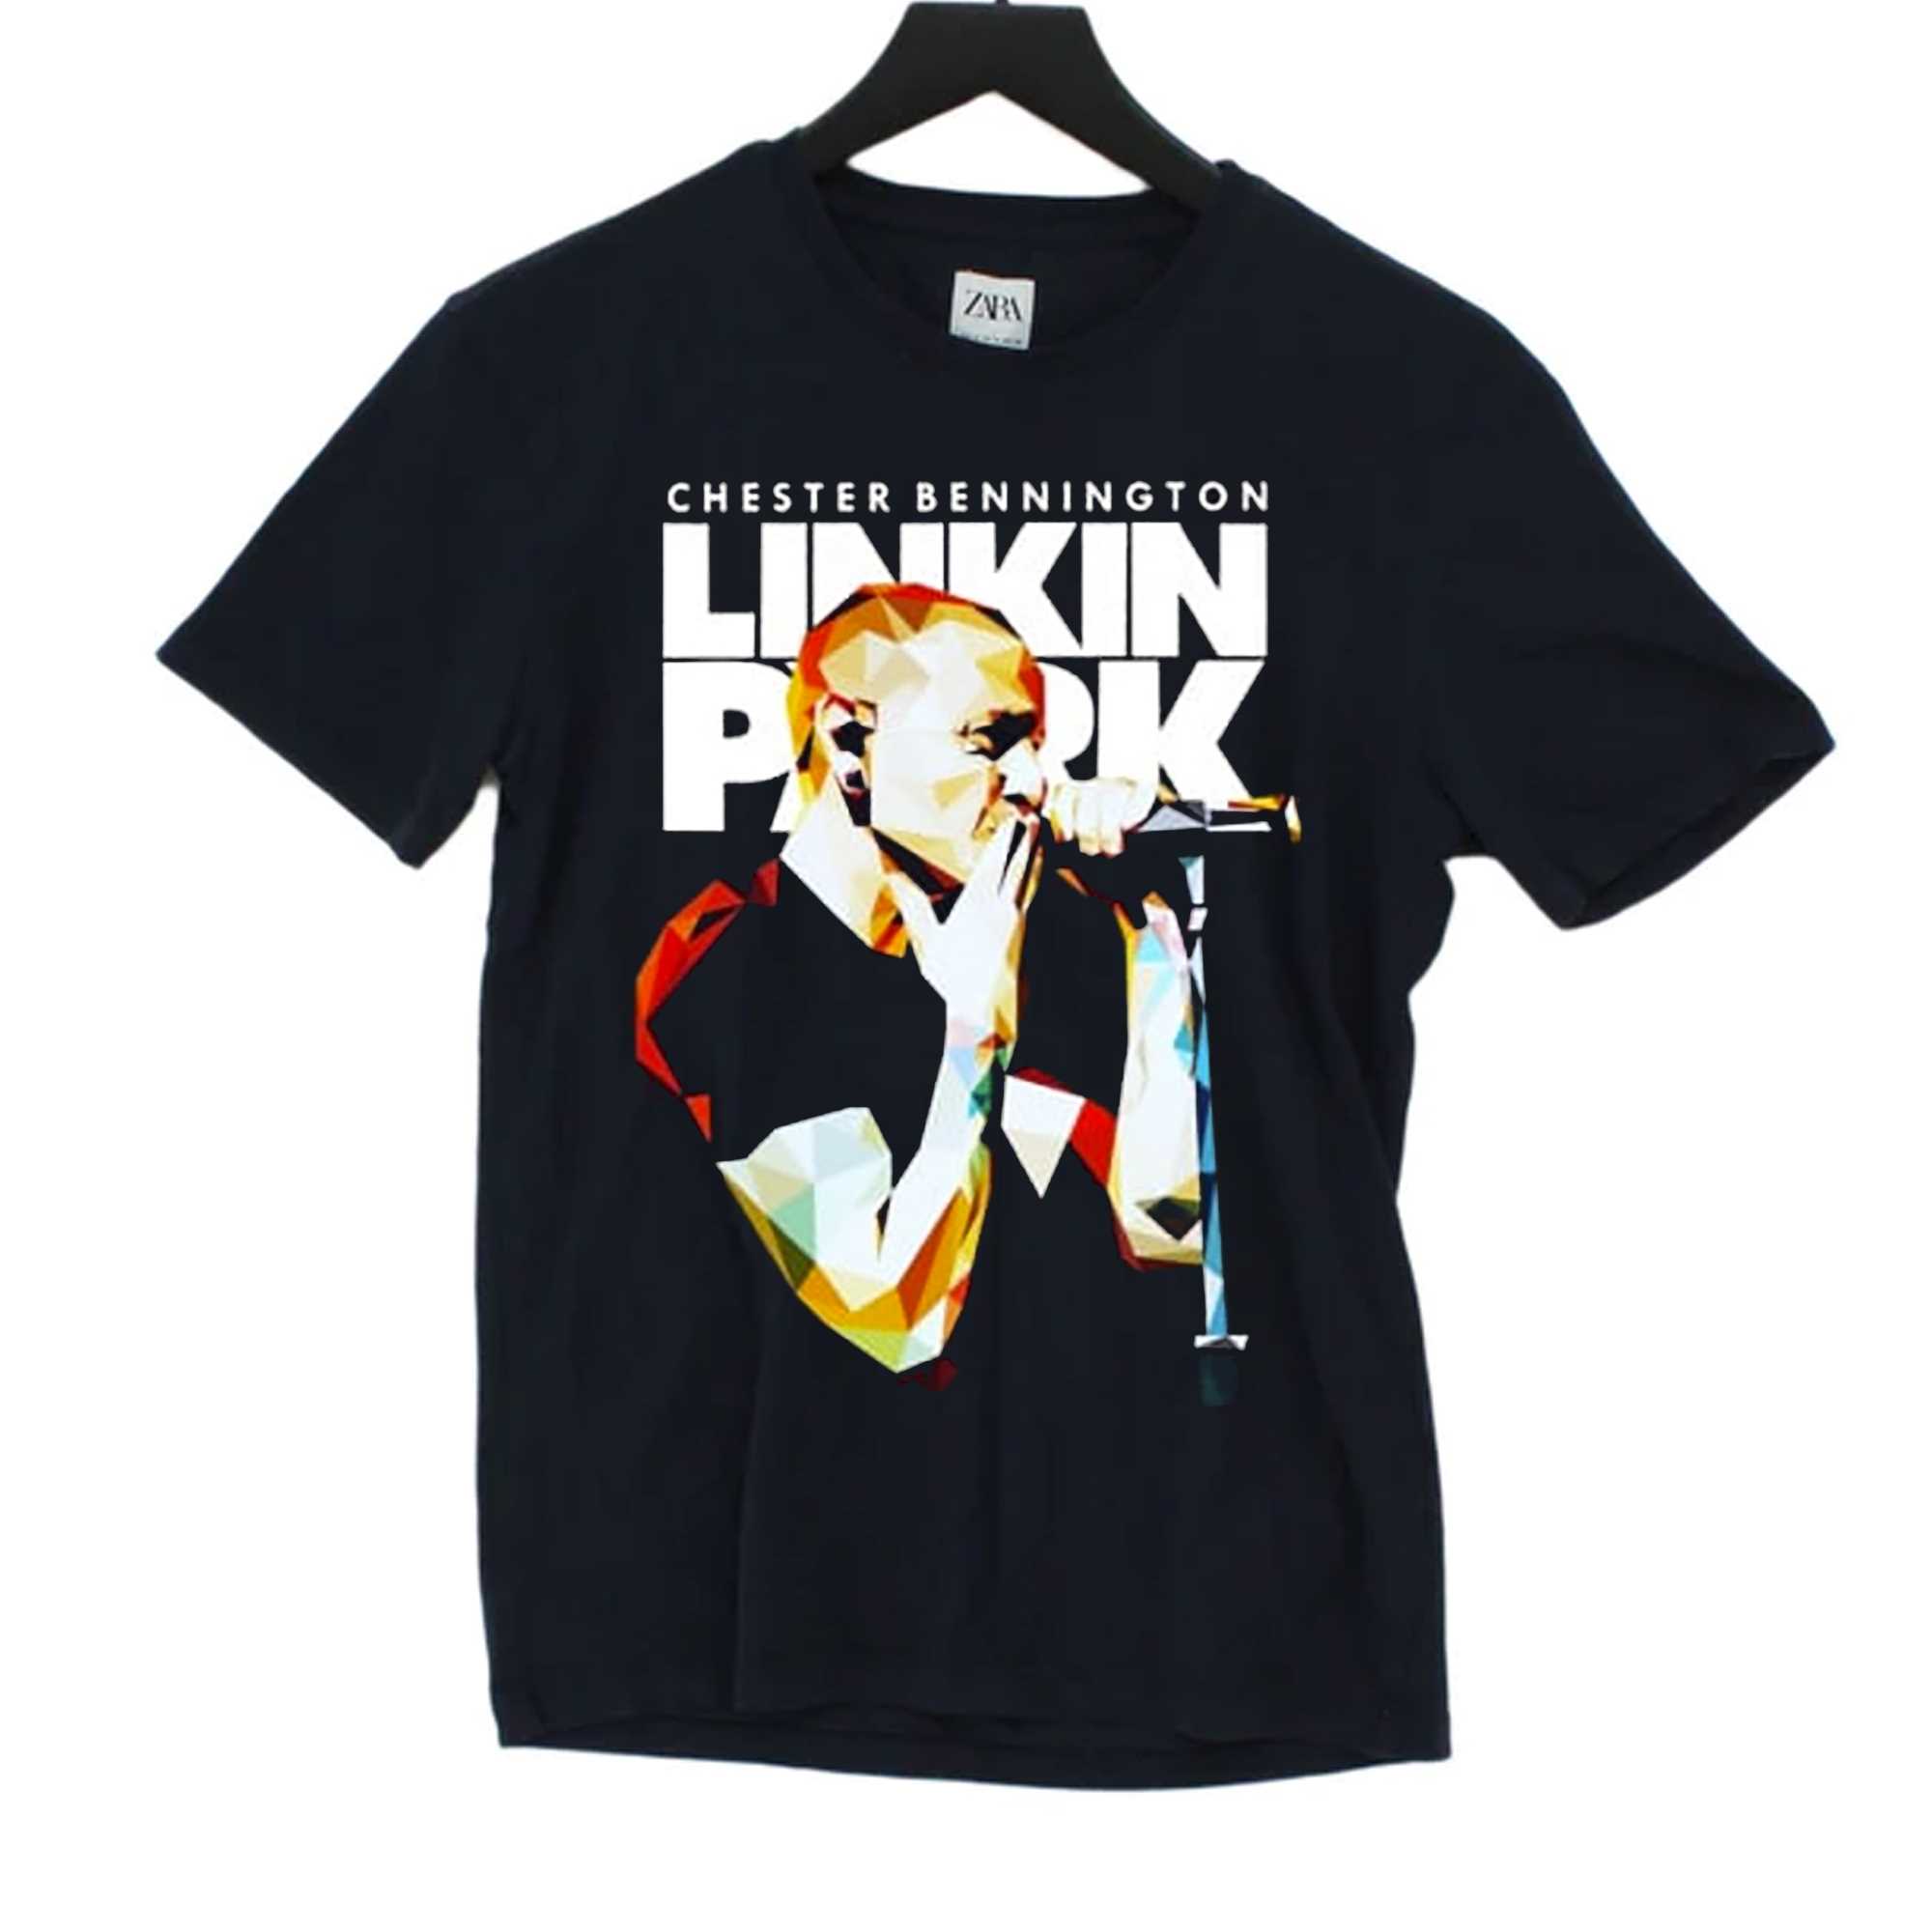 Chester Bennington Linkin Park T-shirt - Shibtee Clothing